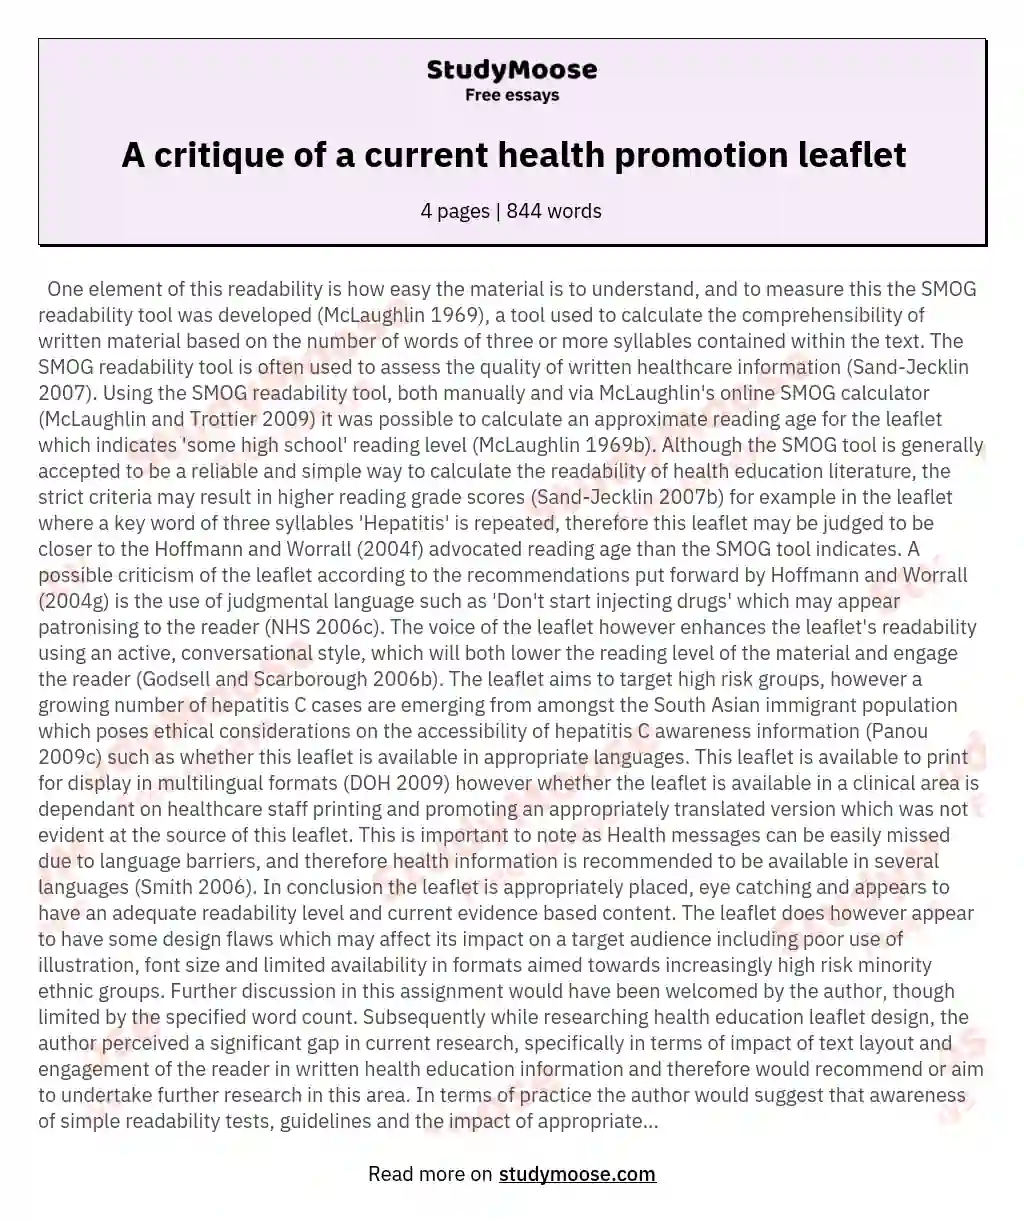 A critique of a current health promotion leaflet essay